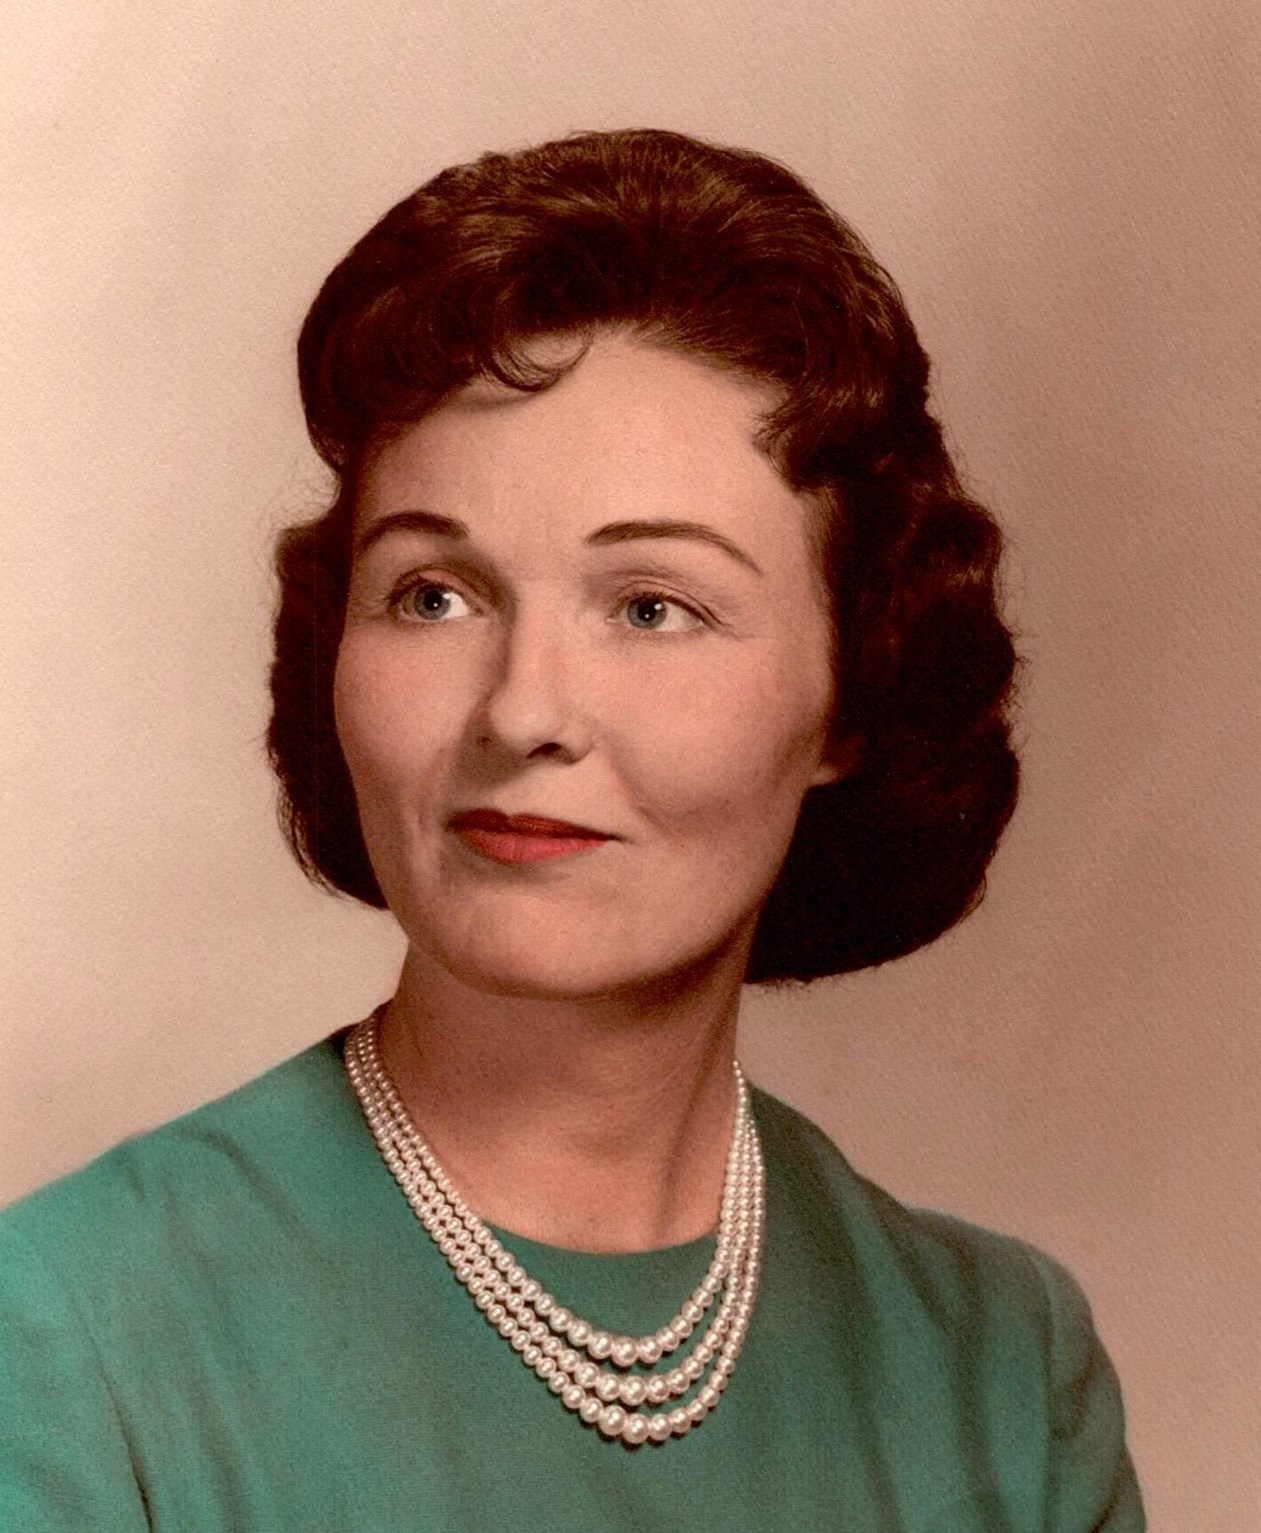 Share Obituary for Carol Jones Wilmington, NC